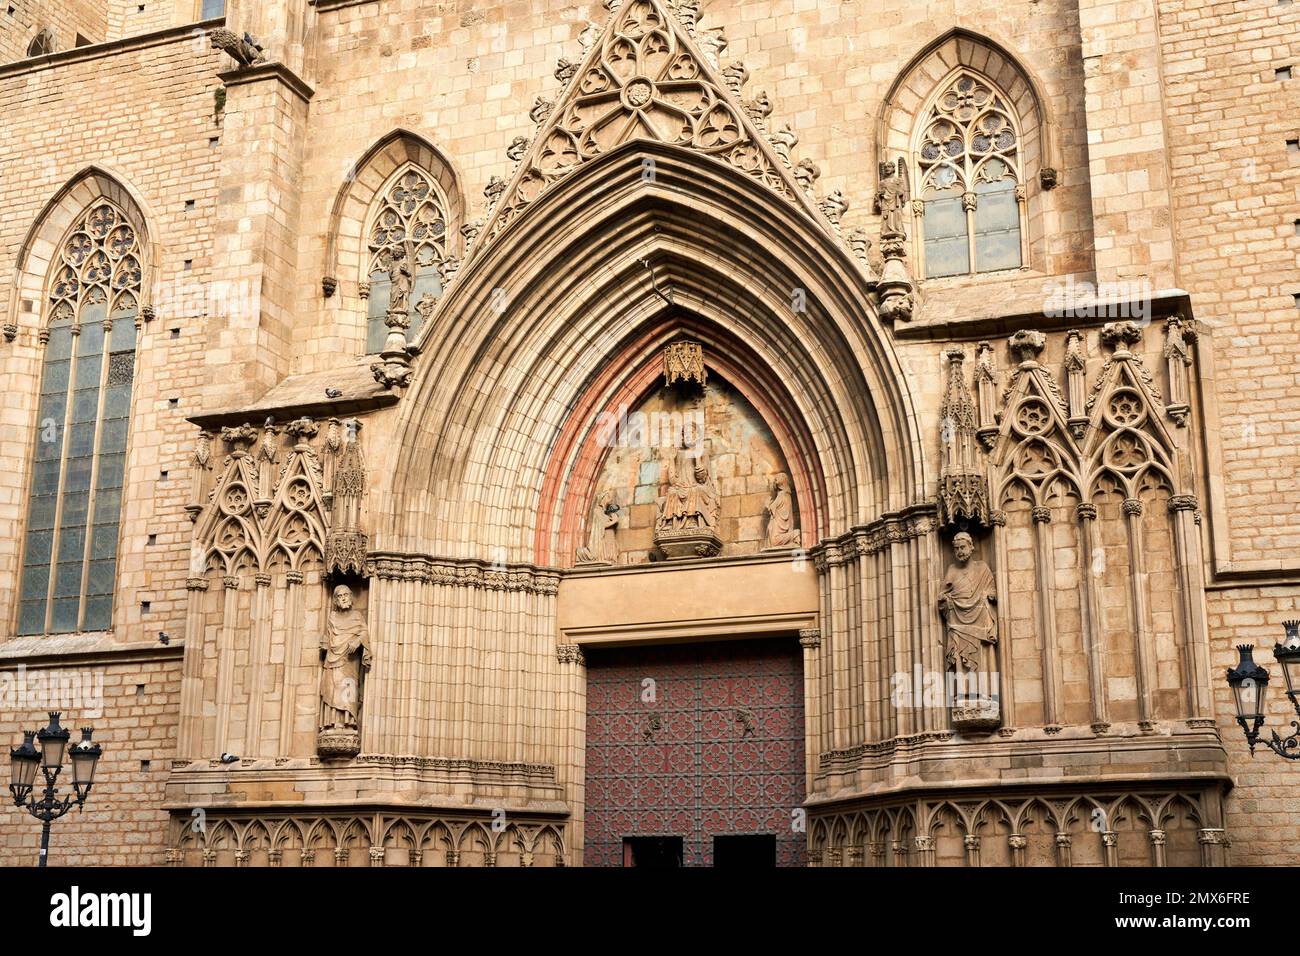 Basílica de Santa Maria del Mar, El Born, Barcelona, Catalonia, Spain. The Basilica of Santa Maria del Mar is a Gothic-style church in the El Born Stock Photo